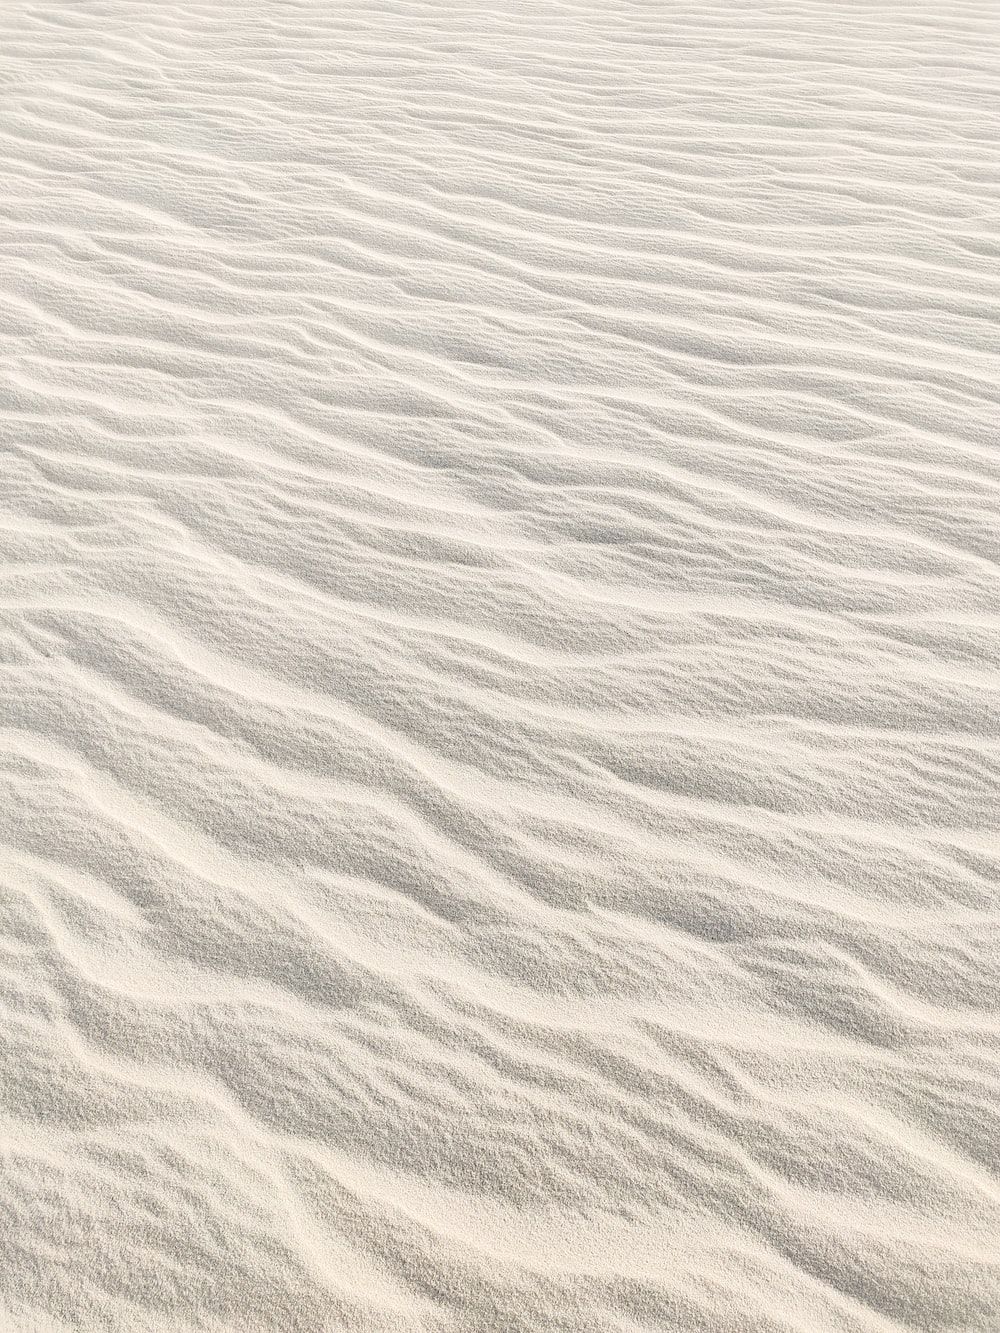  Sand Hintergrundbild 1000x1333. White Sand Picture. Download Free Image